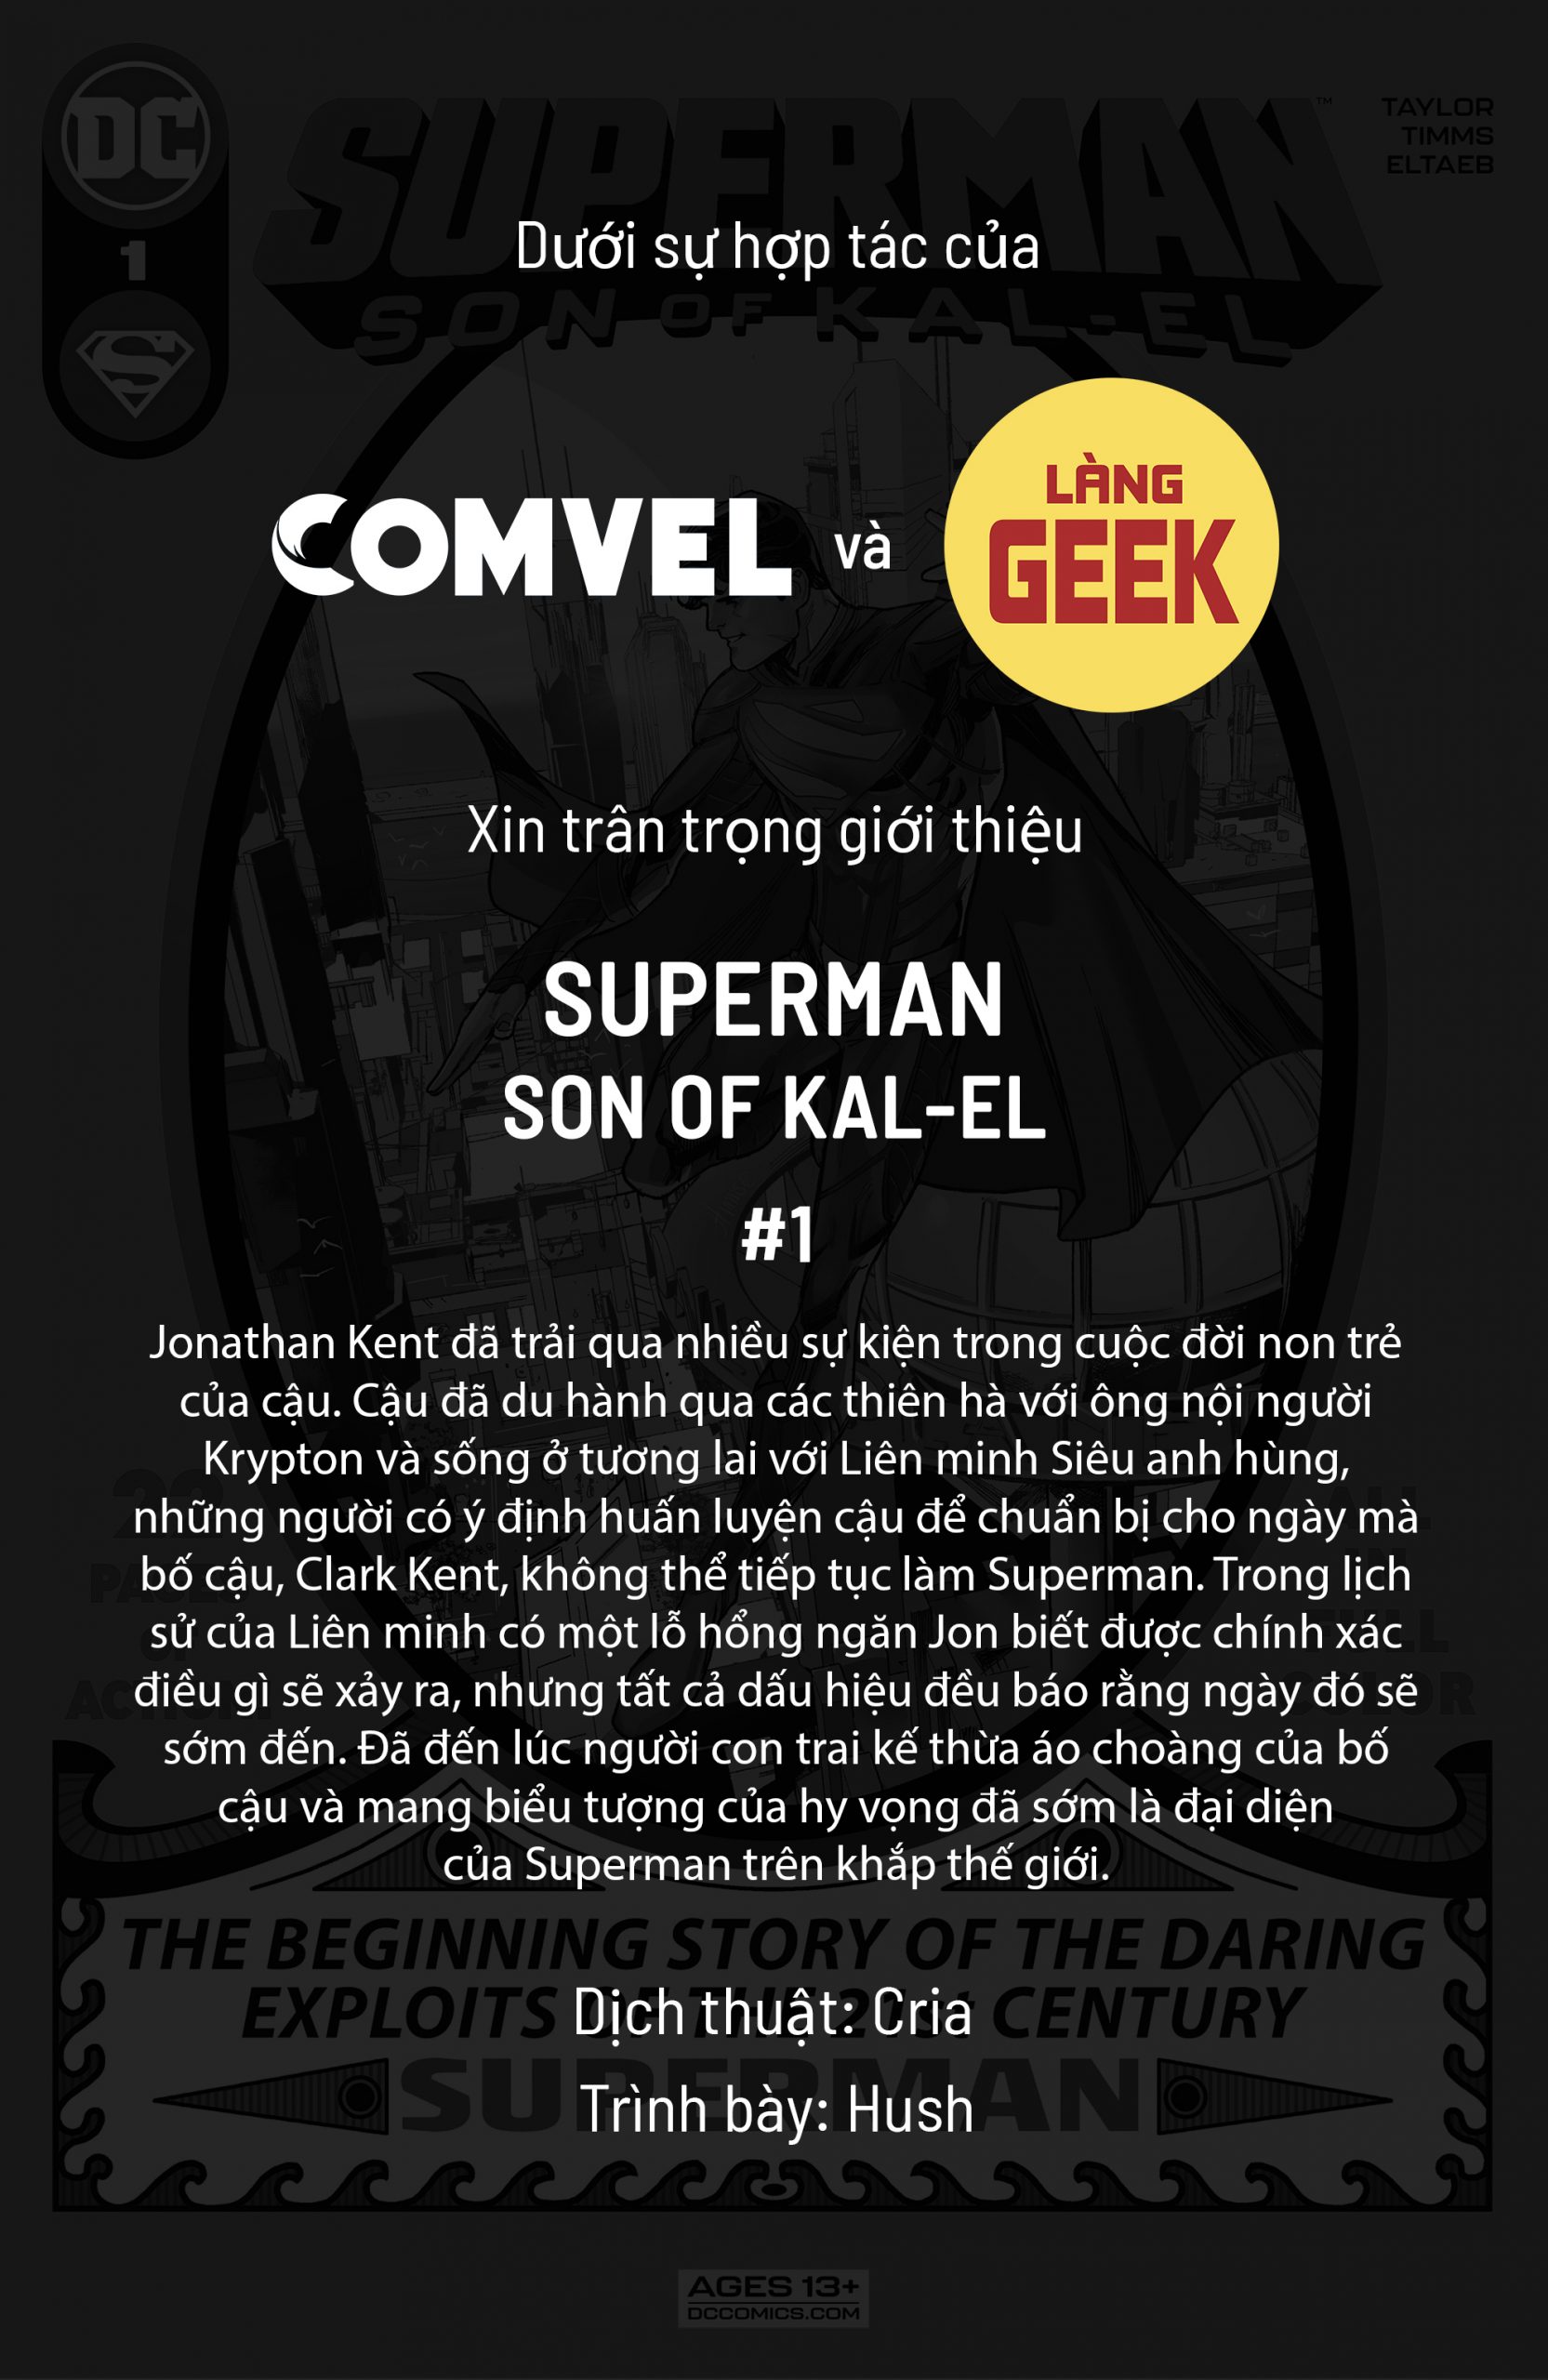 https://langgeek.net/wp-content/webpc-passthru.php?src=https://langgeek.net/wp-content/uploads/2021/12/Superman-Son-of-Kal-El-2021-001-00-scaled.jpg&nocache=1